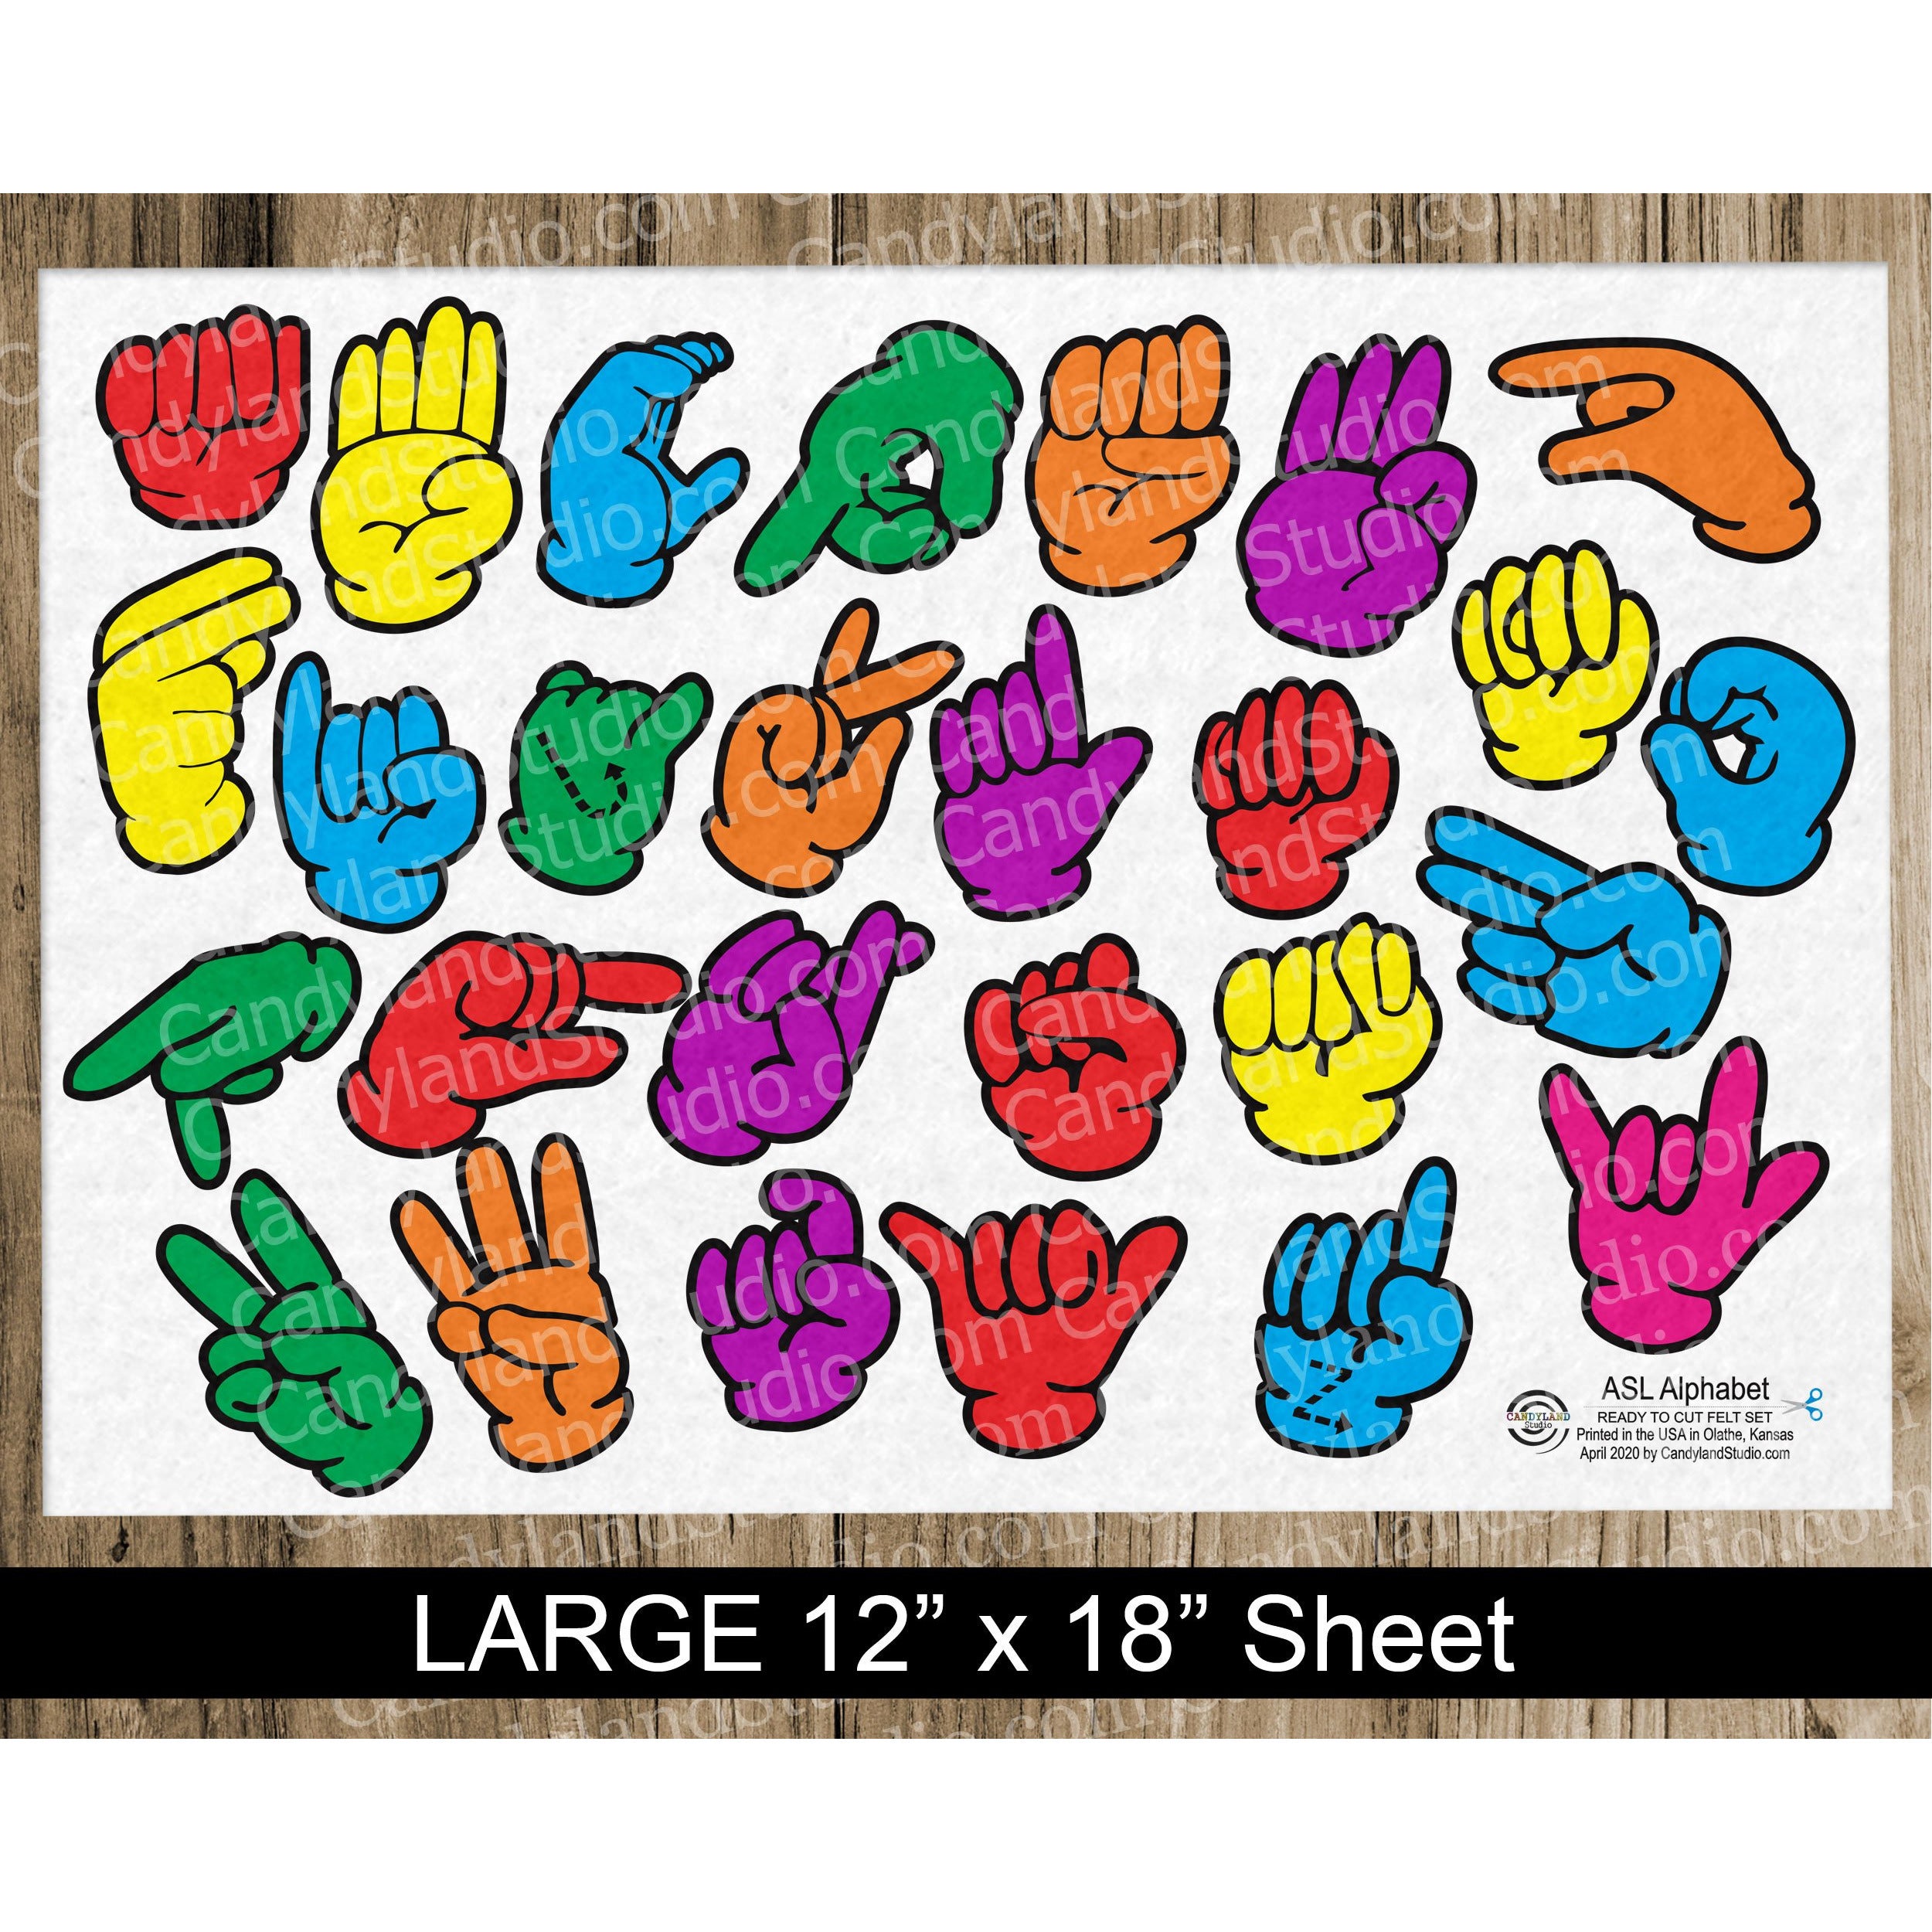 american sign language shapes